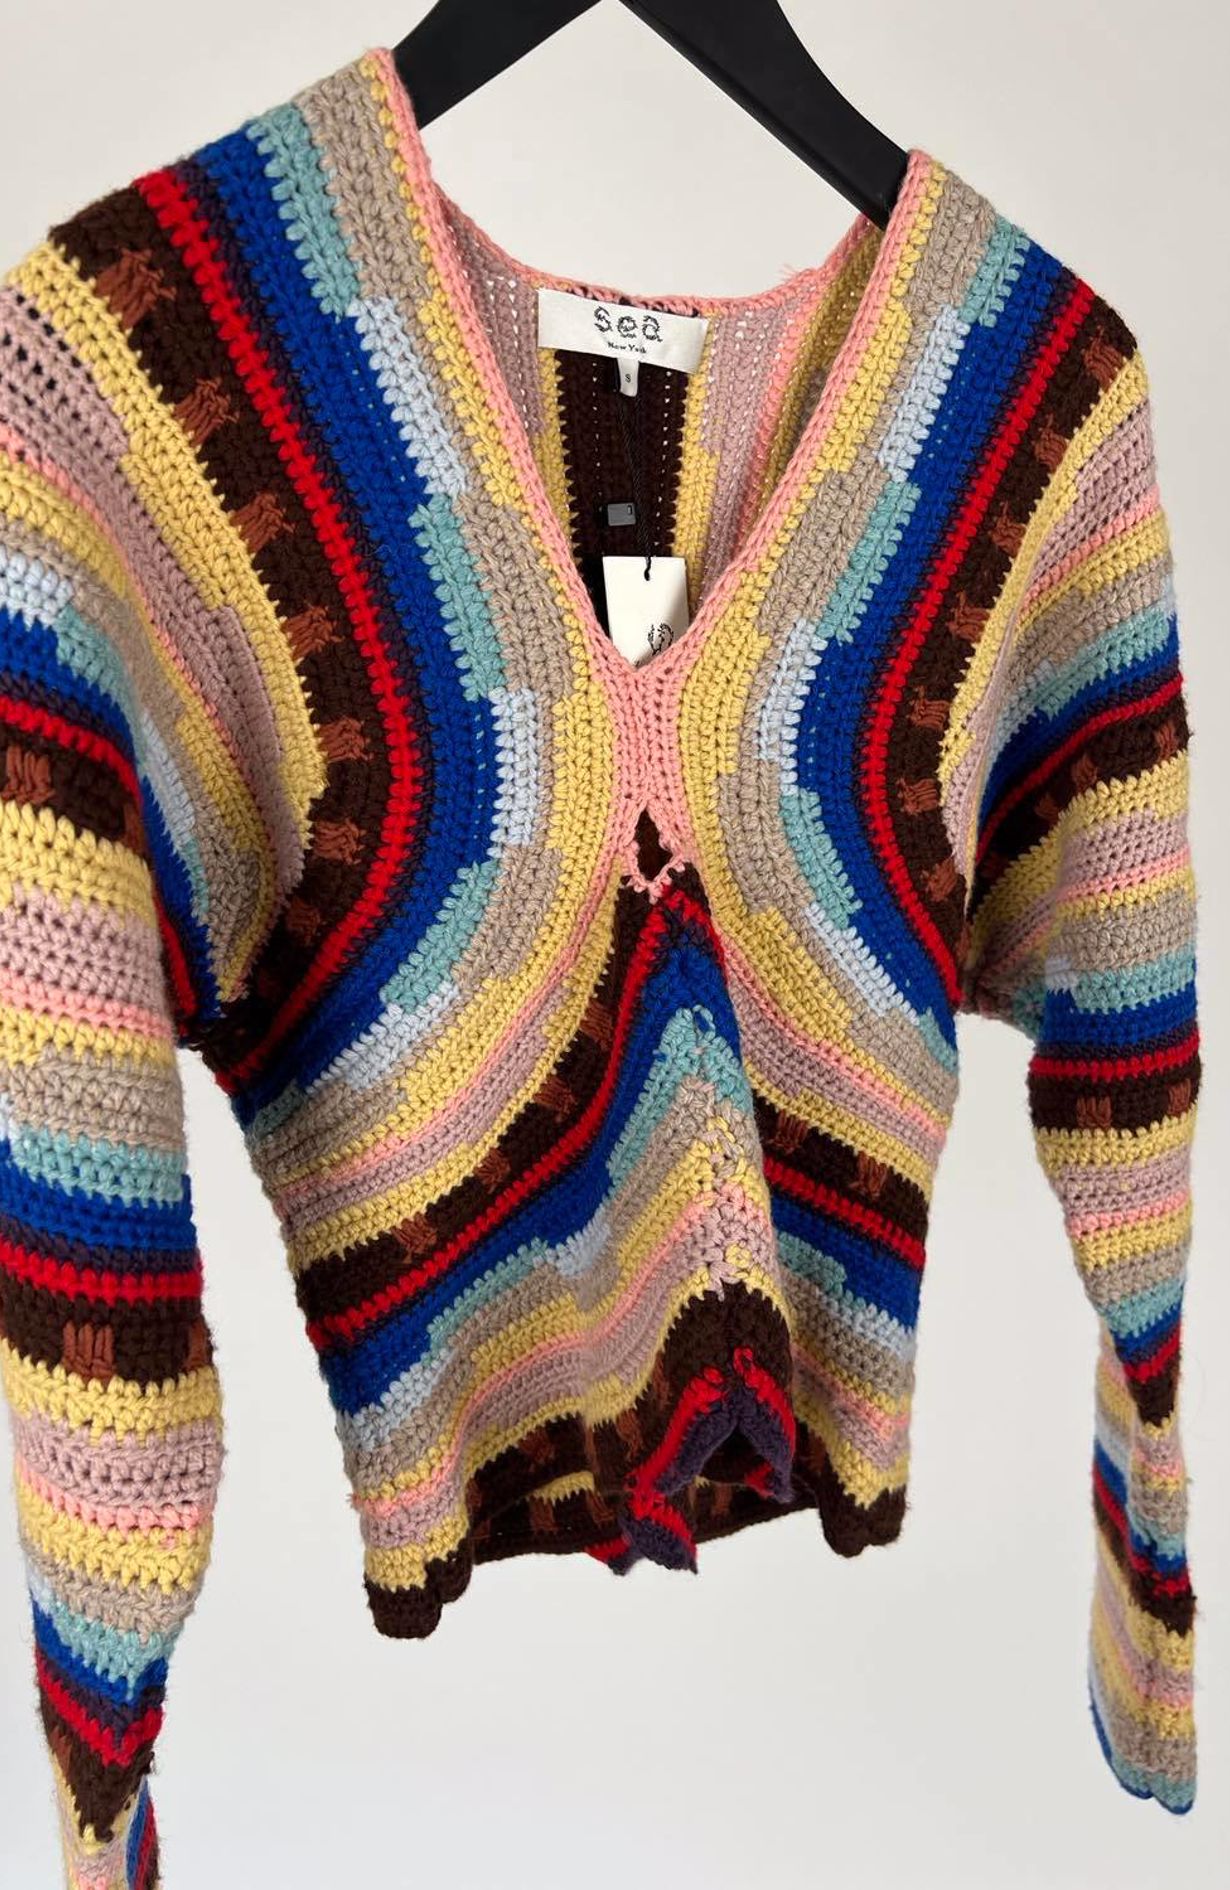 Sea New York chrochet knit multi size S